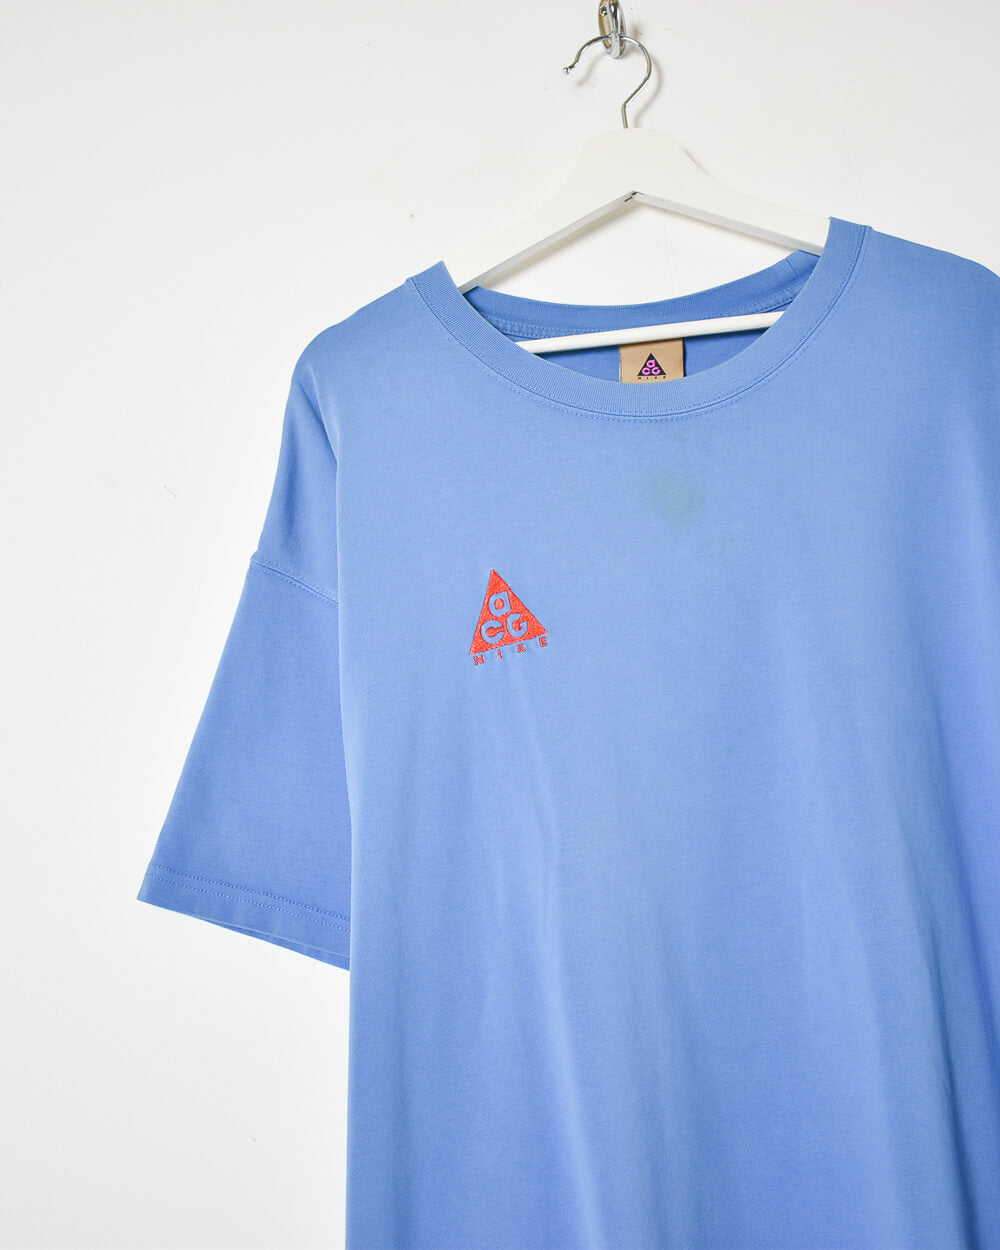 Blue Nike ACG T-Shirt - XX-Large